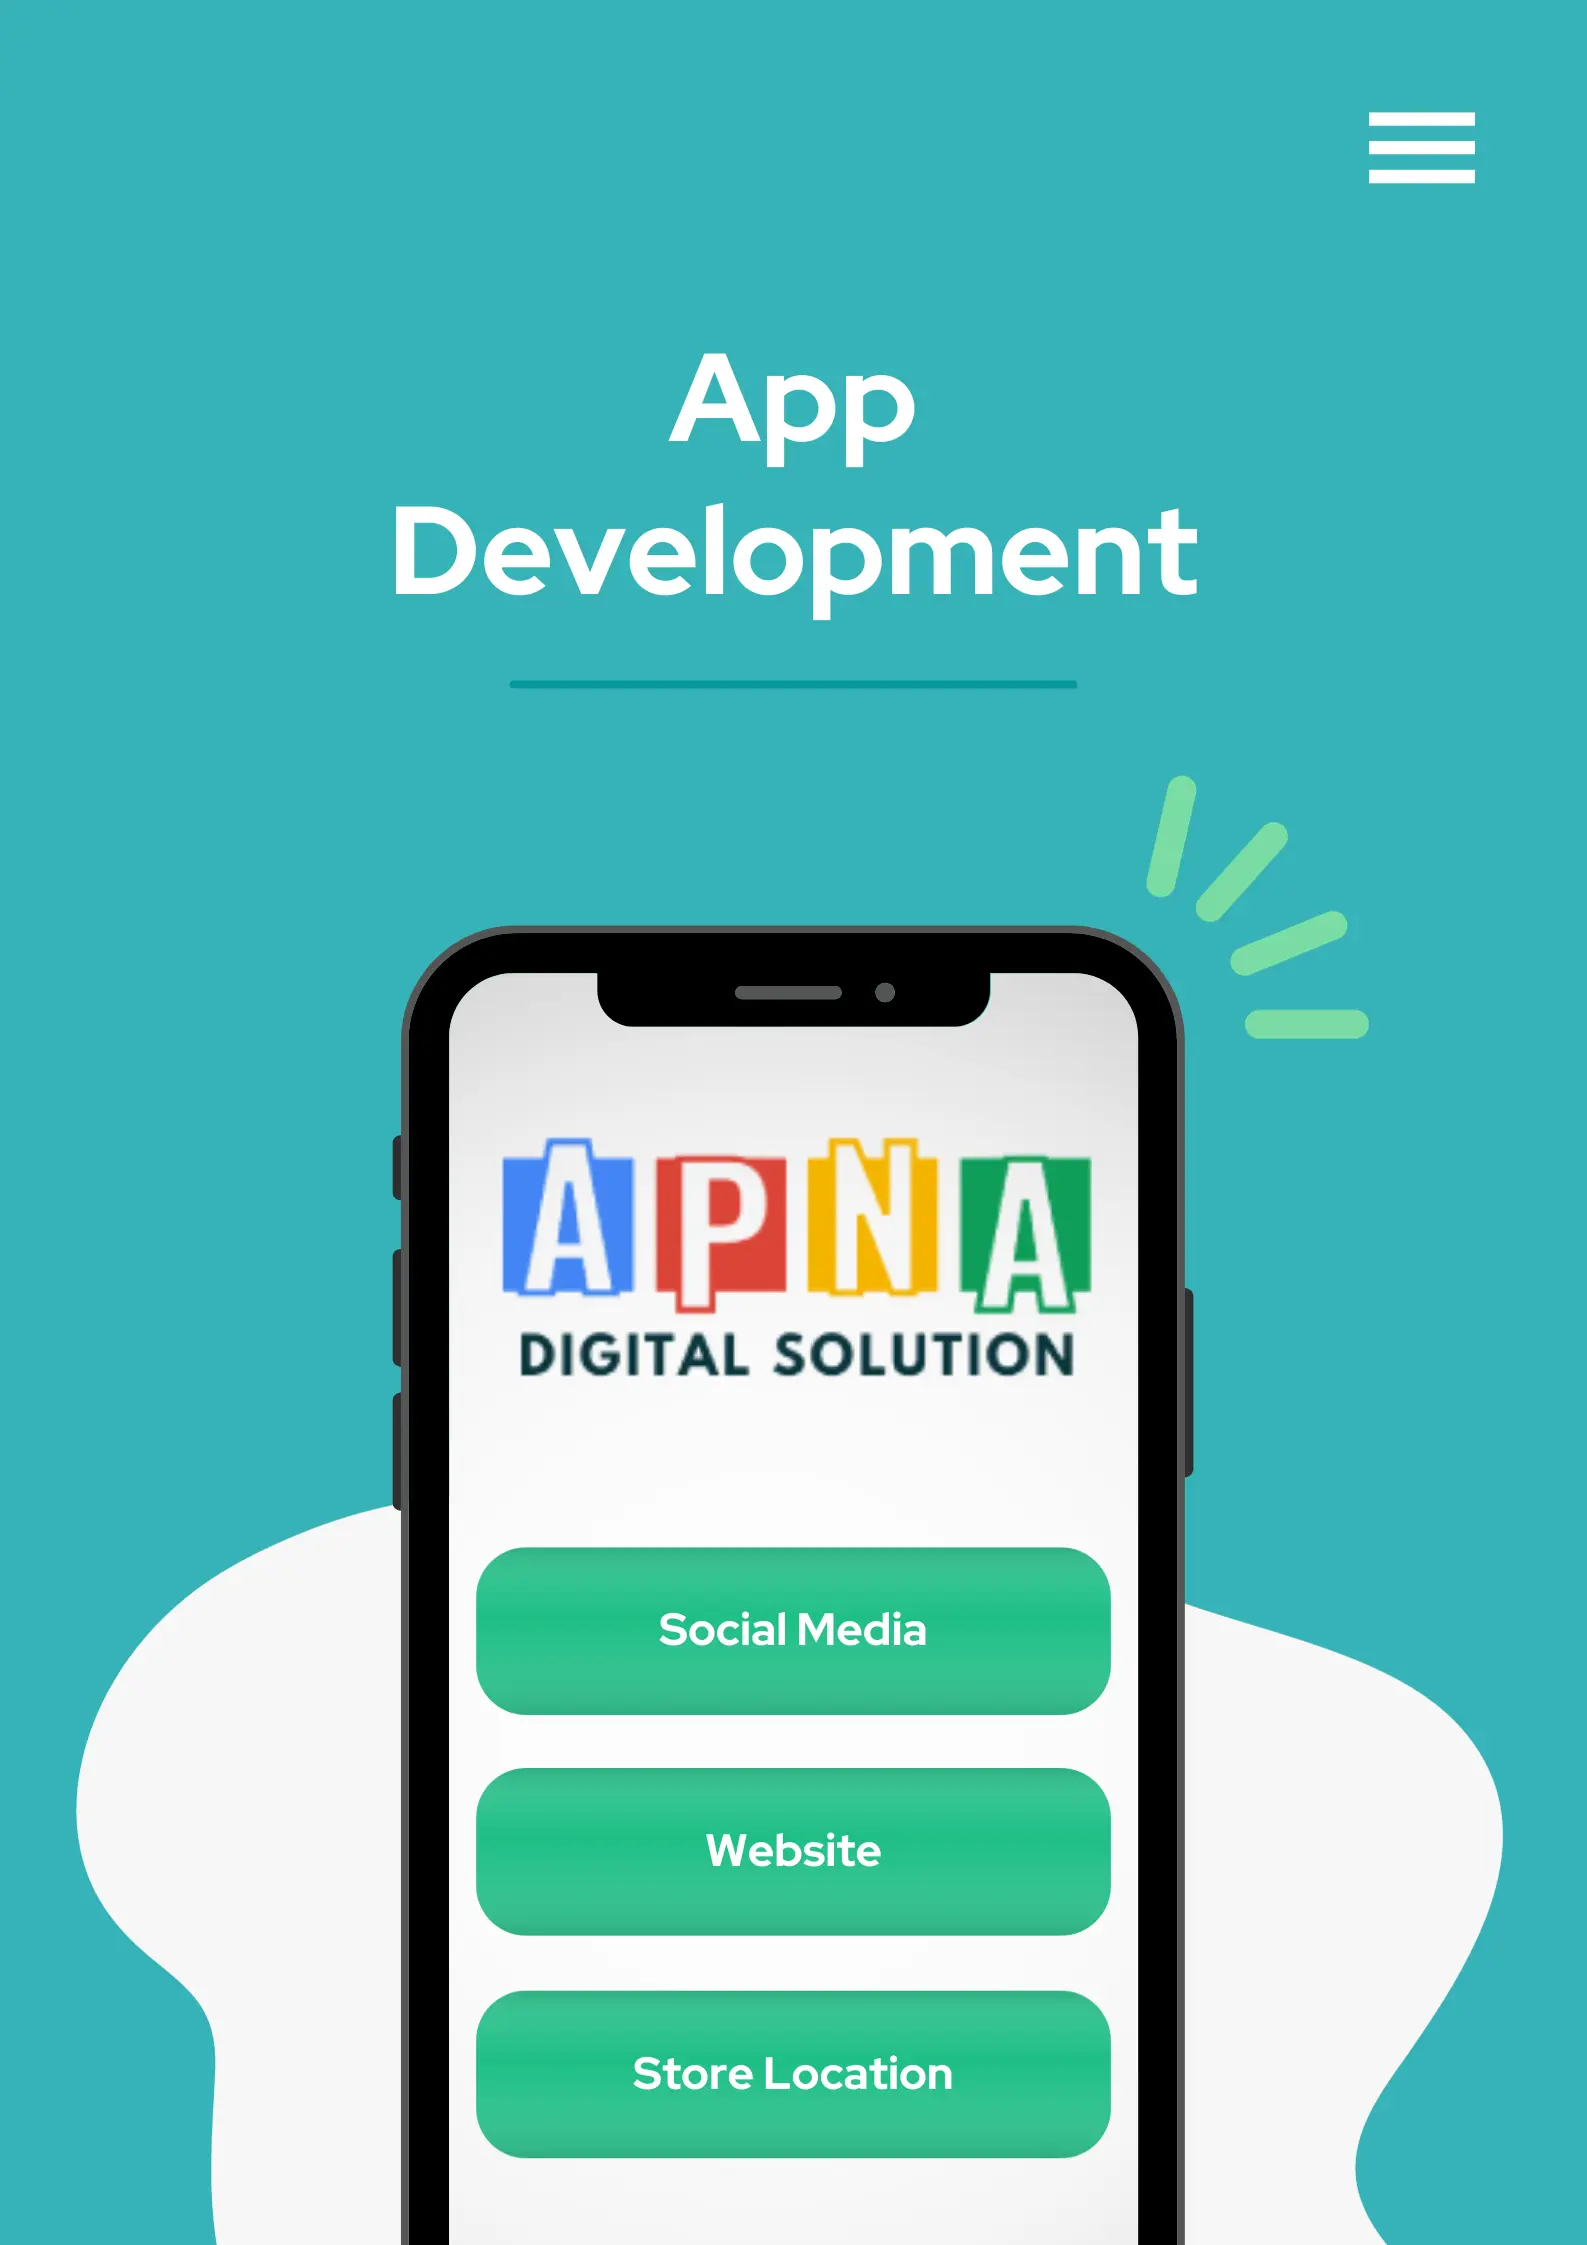 apna-digital-solutions-offers-best-app-development-services